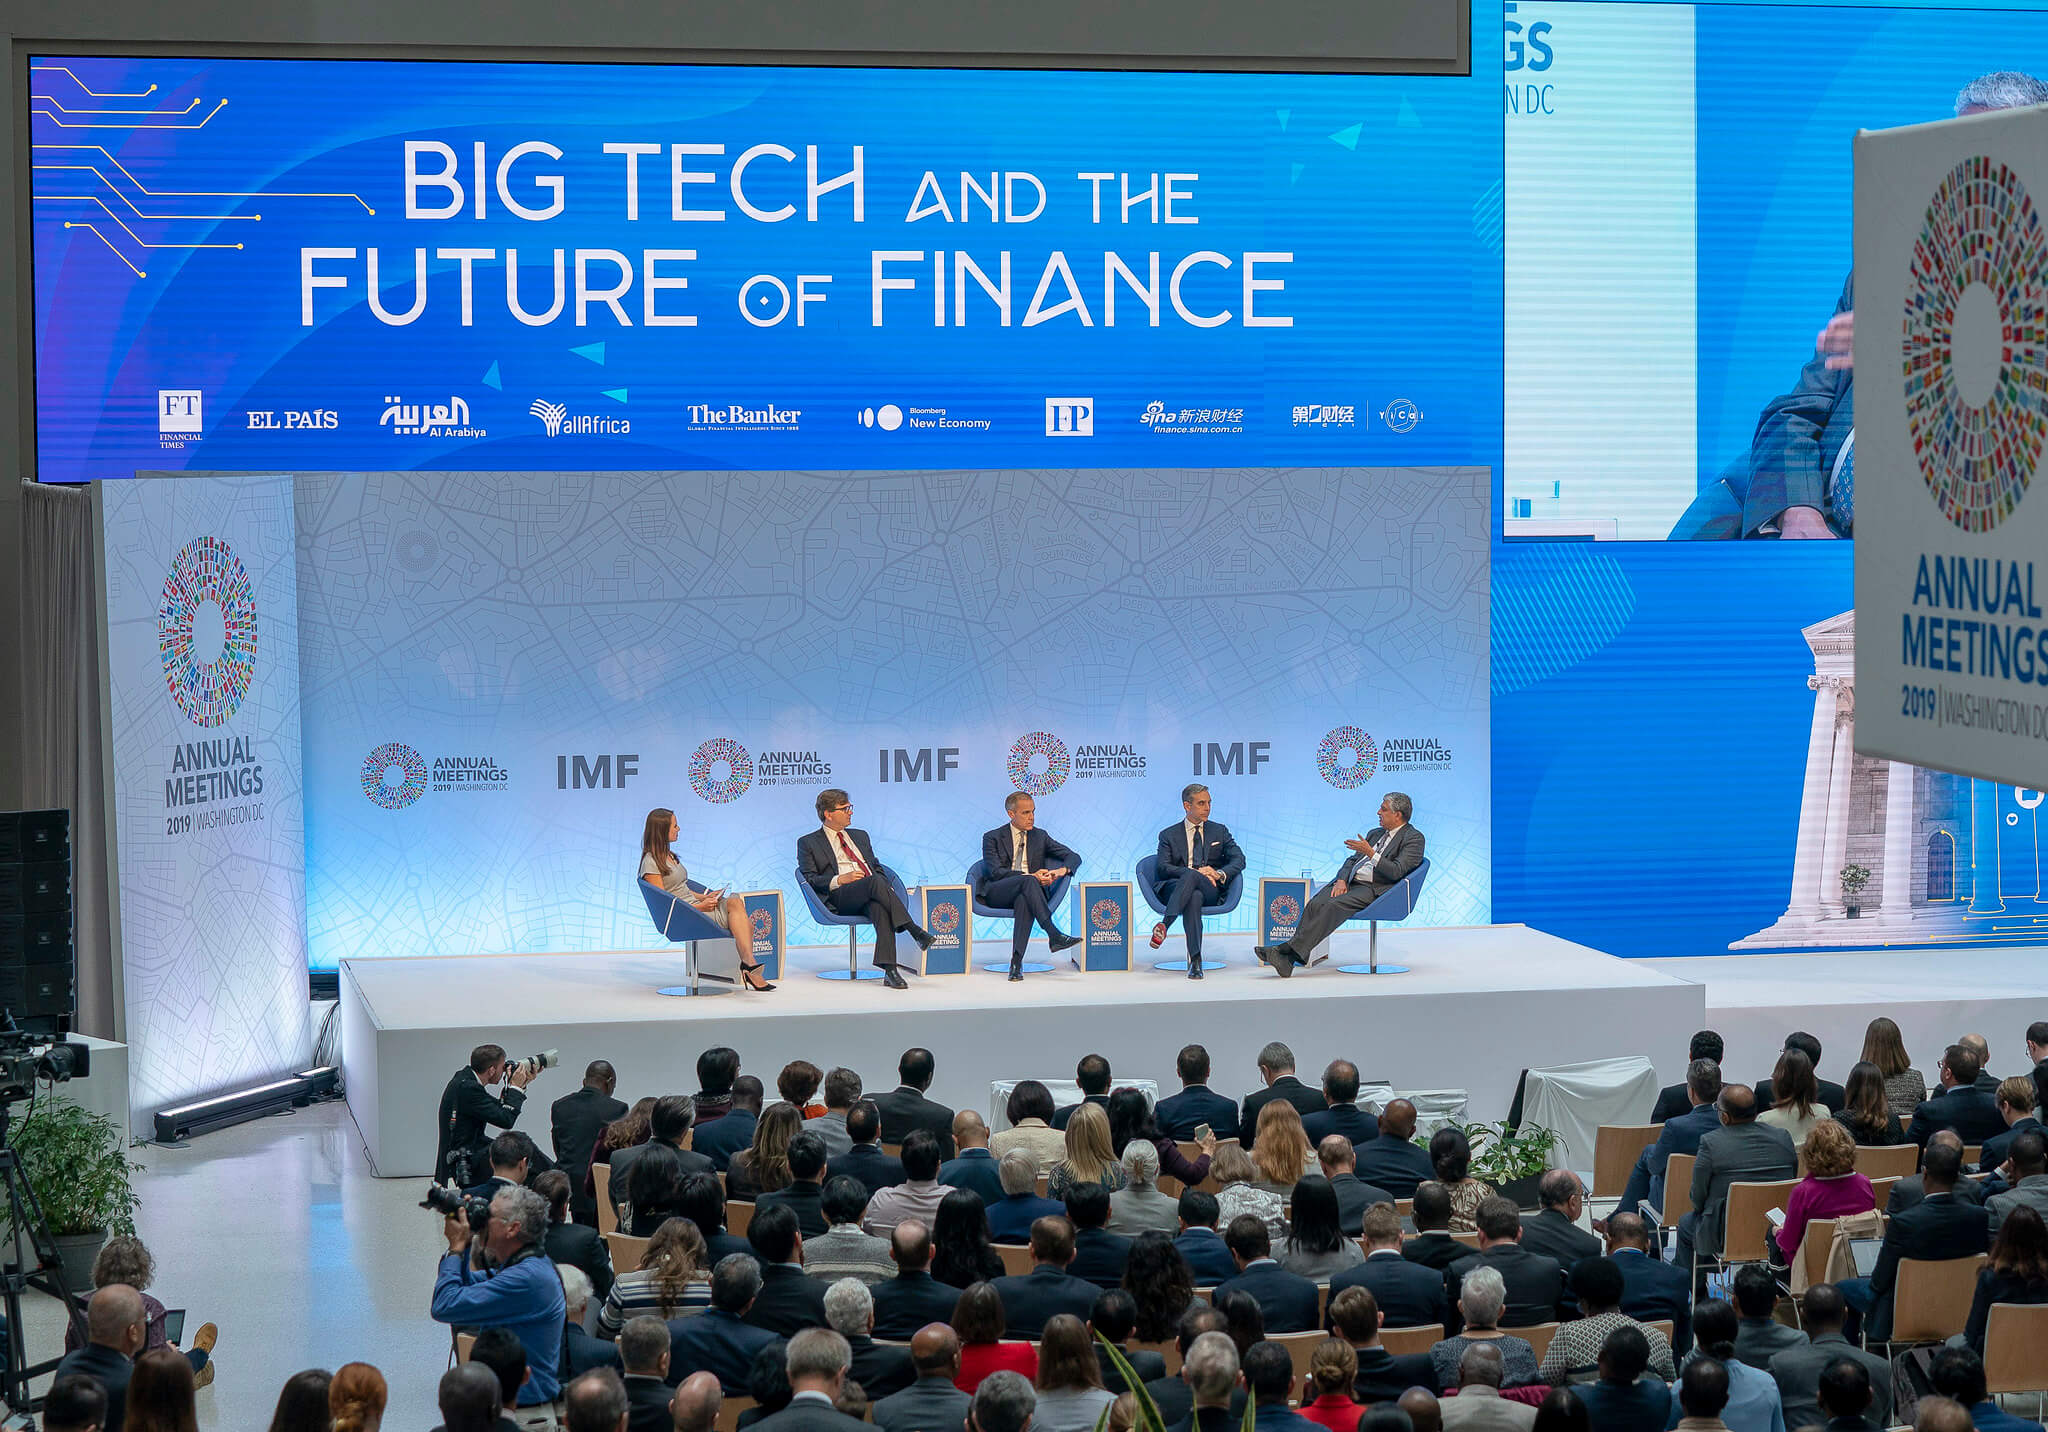 DeWit-Seminar van het IMF over 'Big Tech and the Future of Finance' in 2019. IMF - Flickr